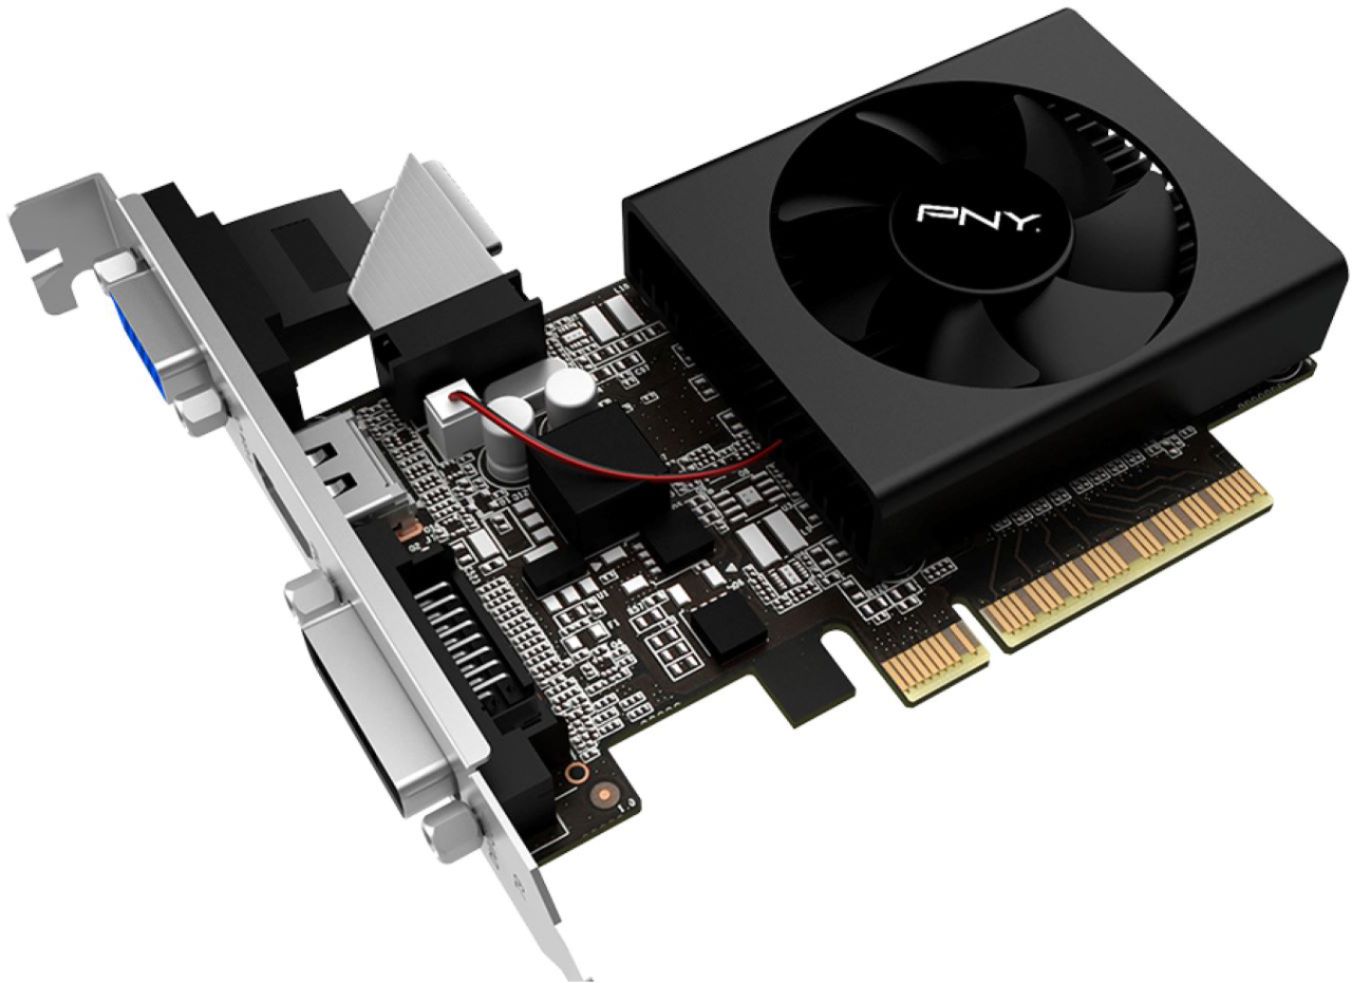 NVIDIA GeForce GT730